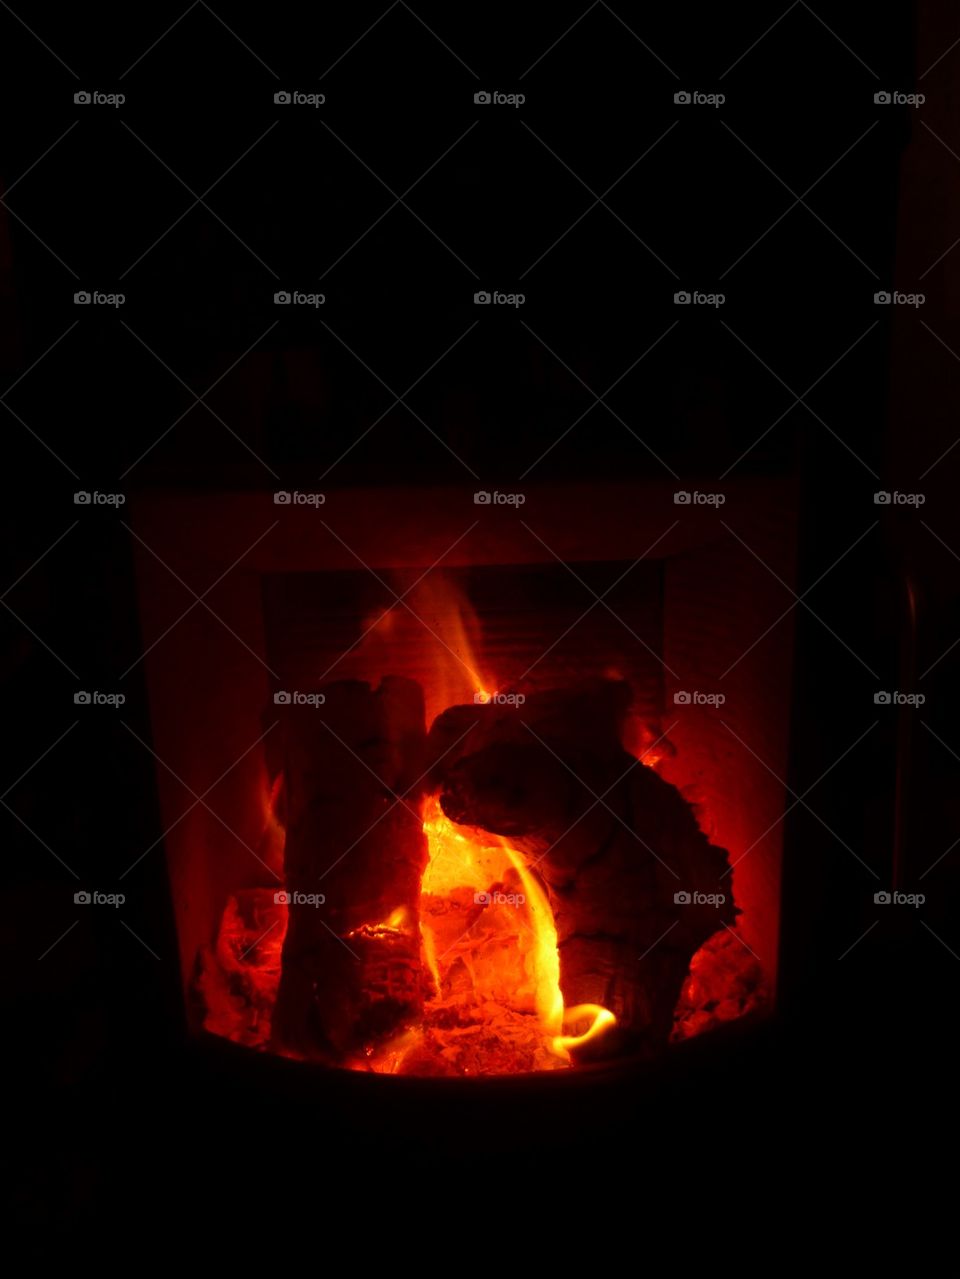 Wood burner